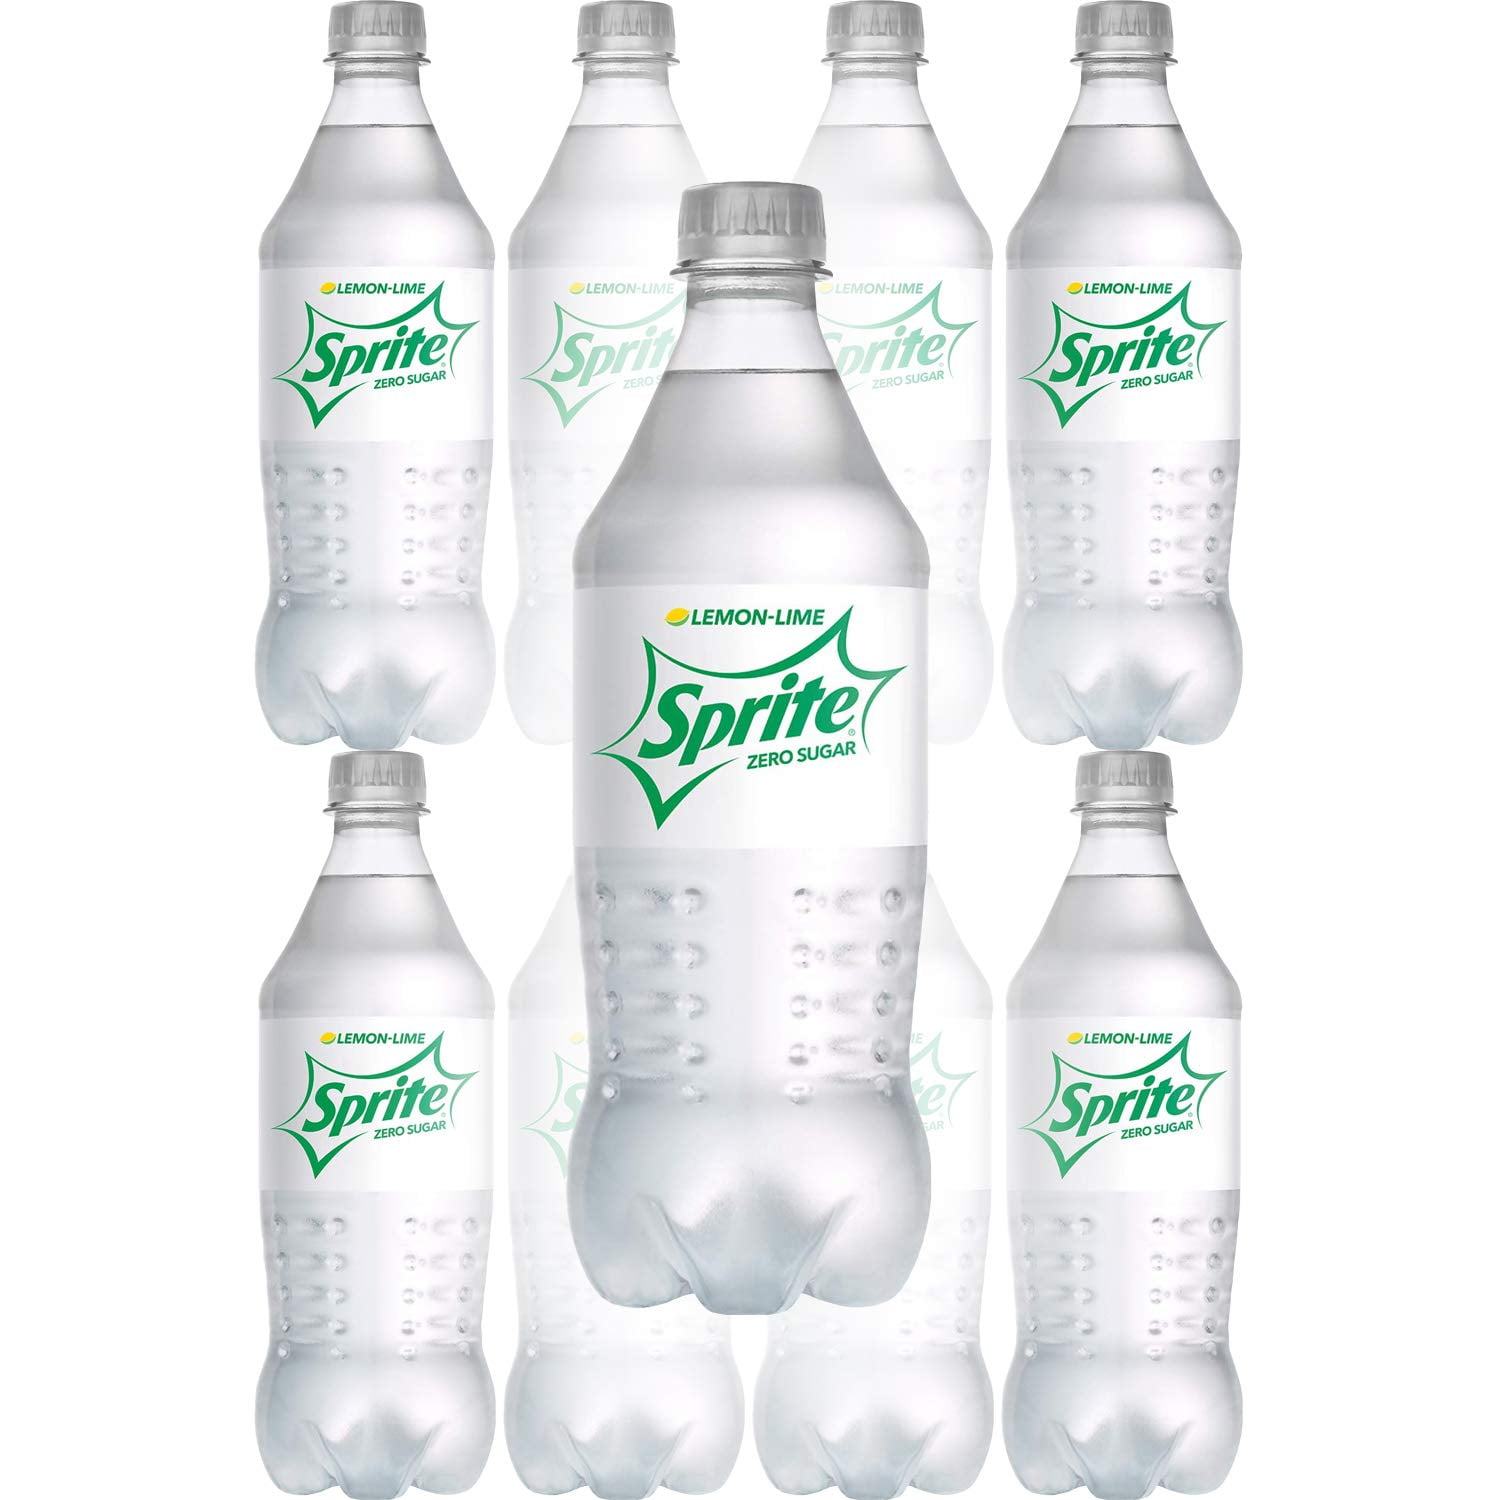 Sprite Zero Sugar Lemonade Soft Drink Multipack Bottles 12x300ml 12 pack, Delivery Near You